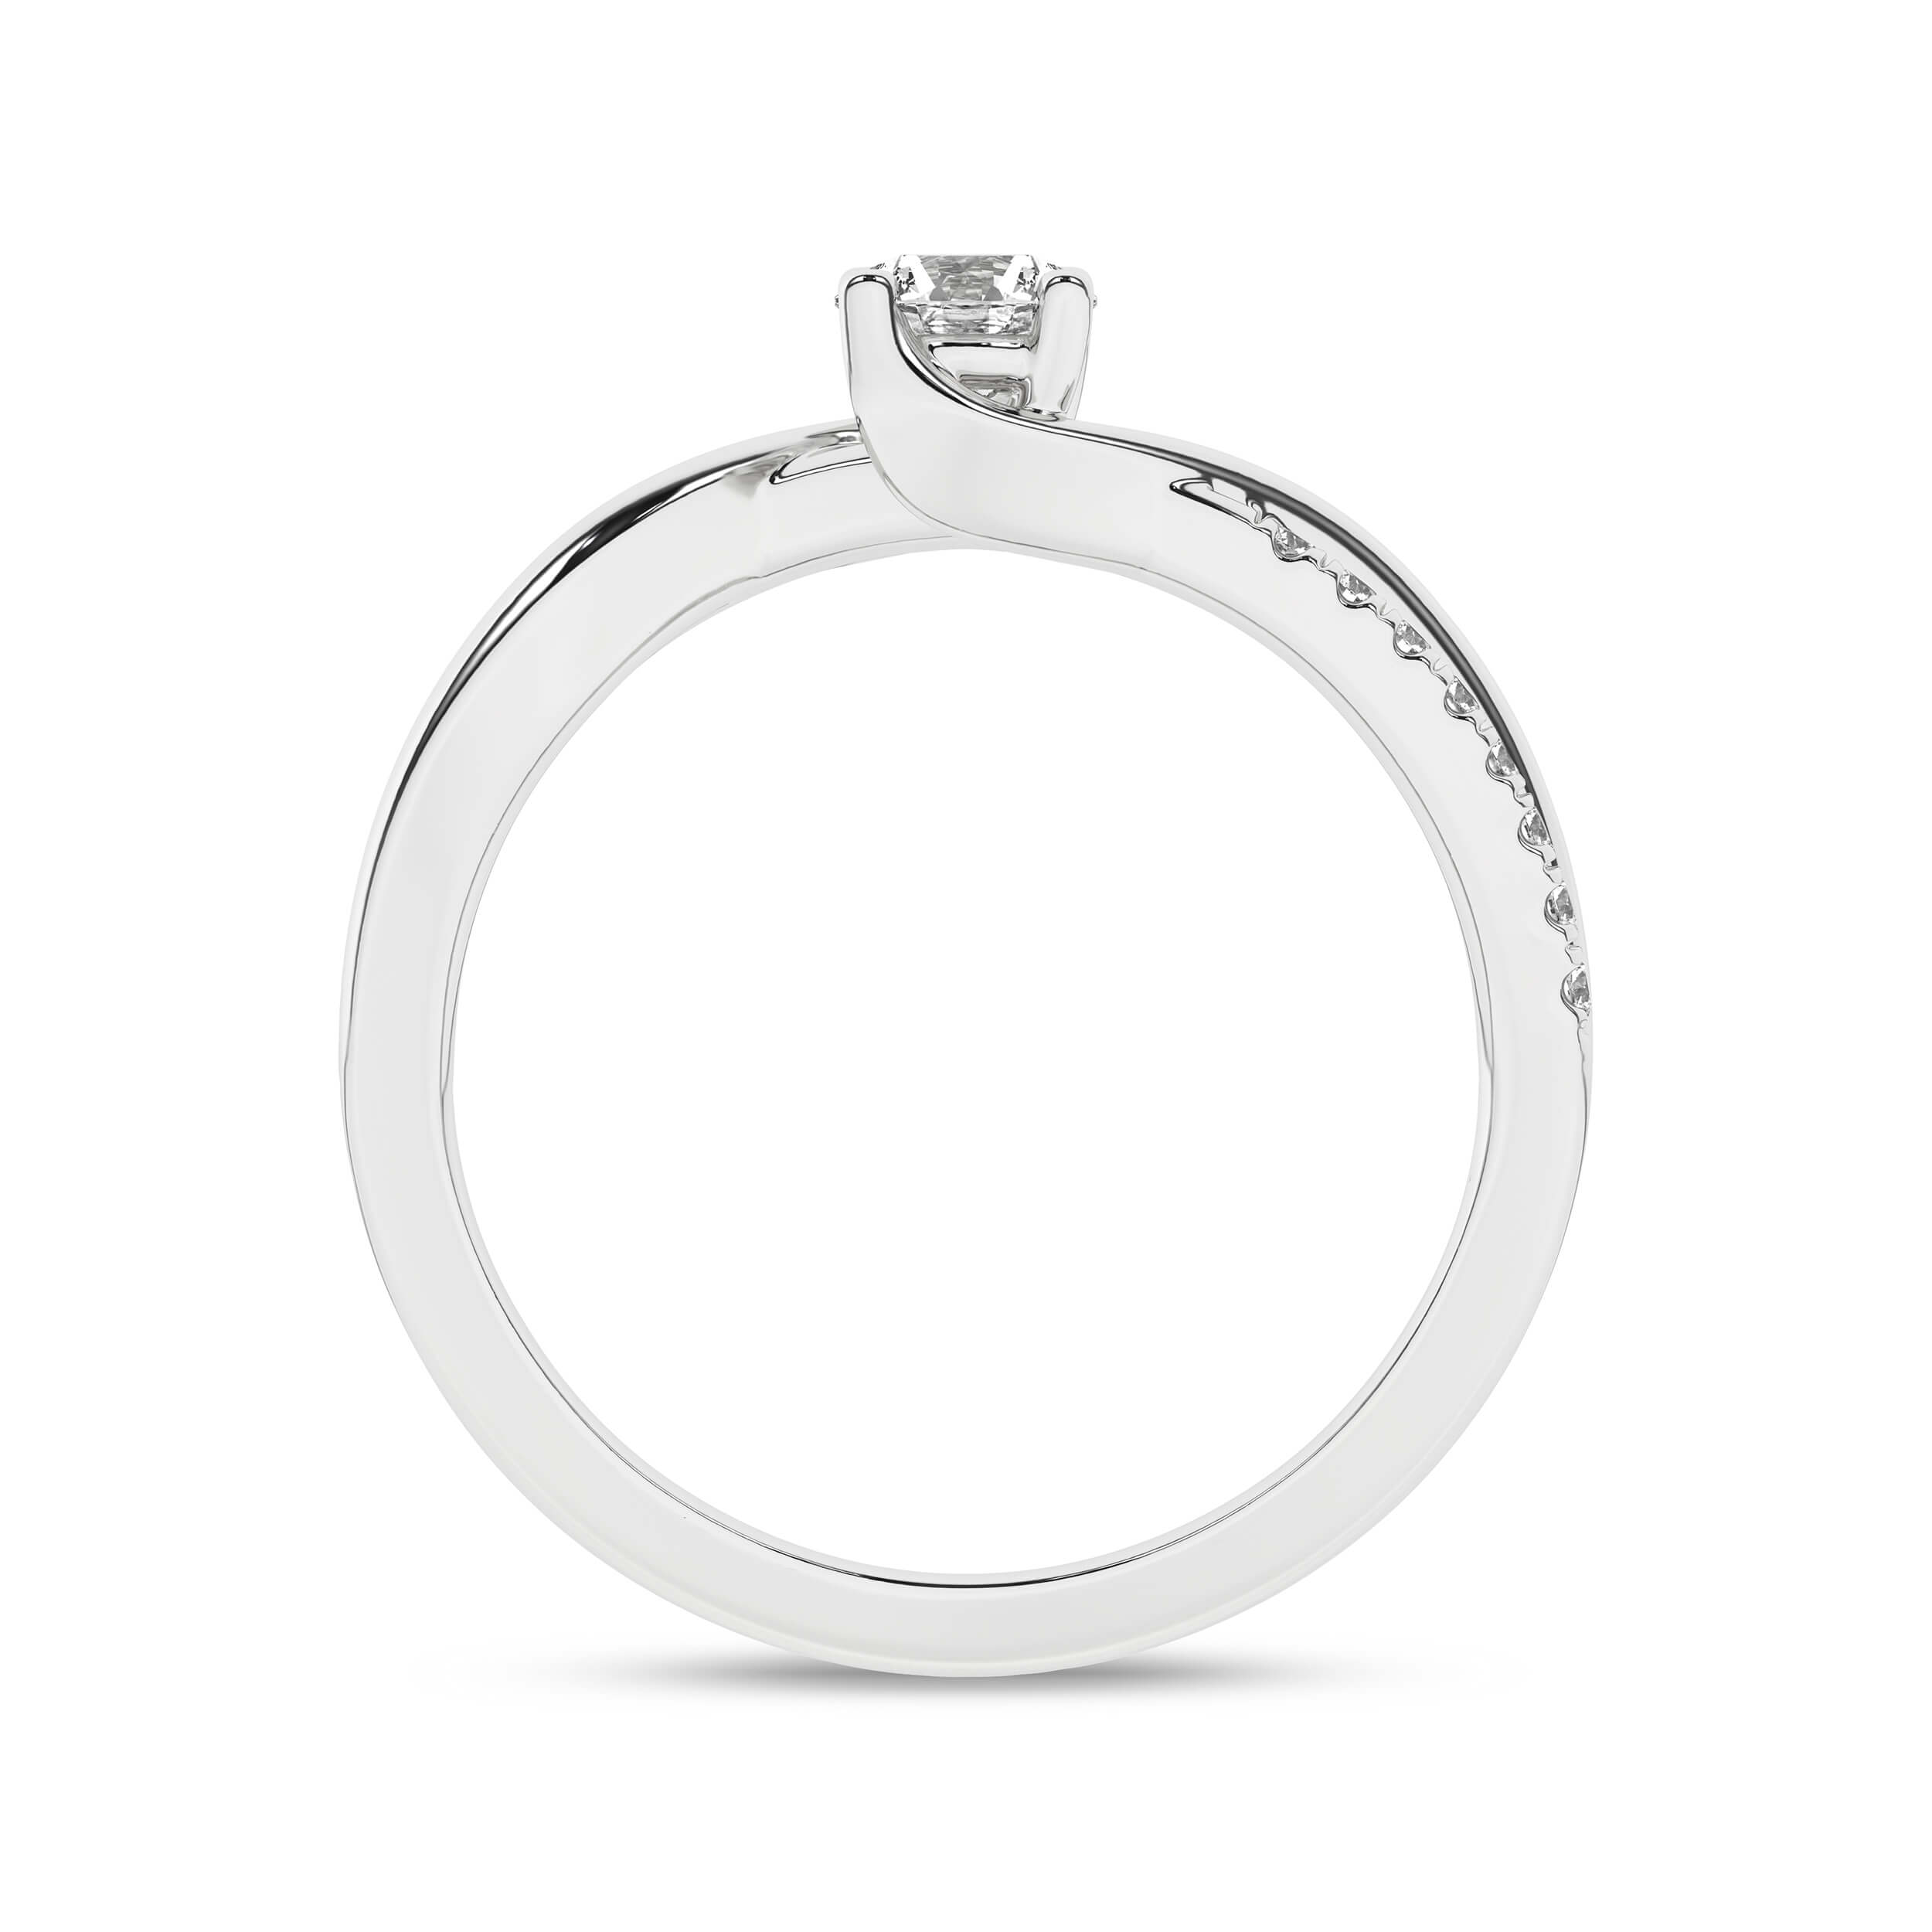 Inel de logodna din Aur Alb 14K cu Diamante 0.33Ct, articol MSD0522EG, previzualizare foto 3